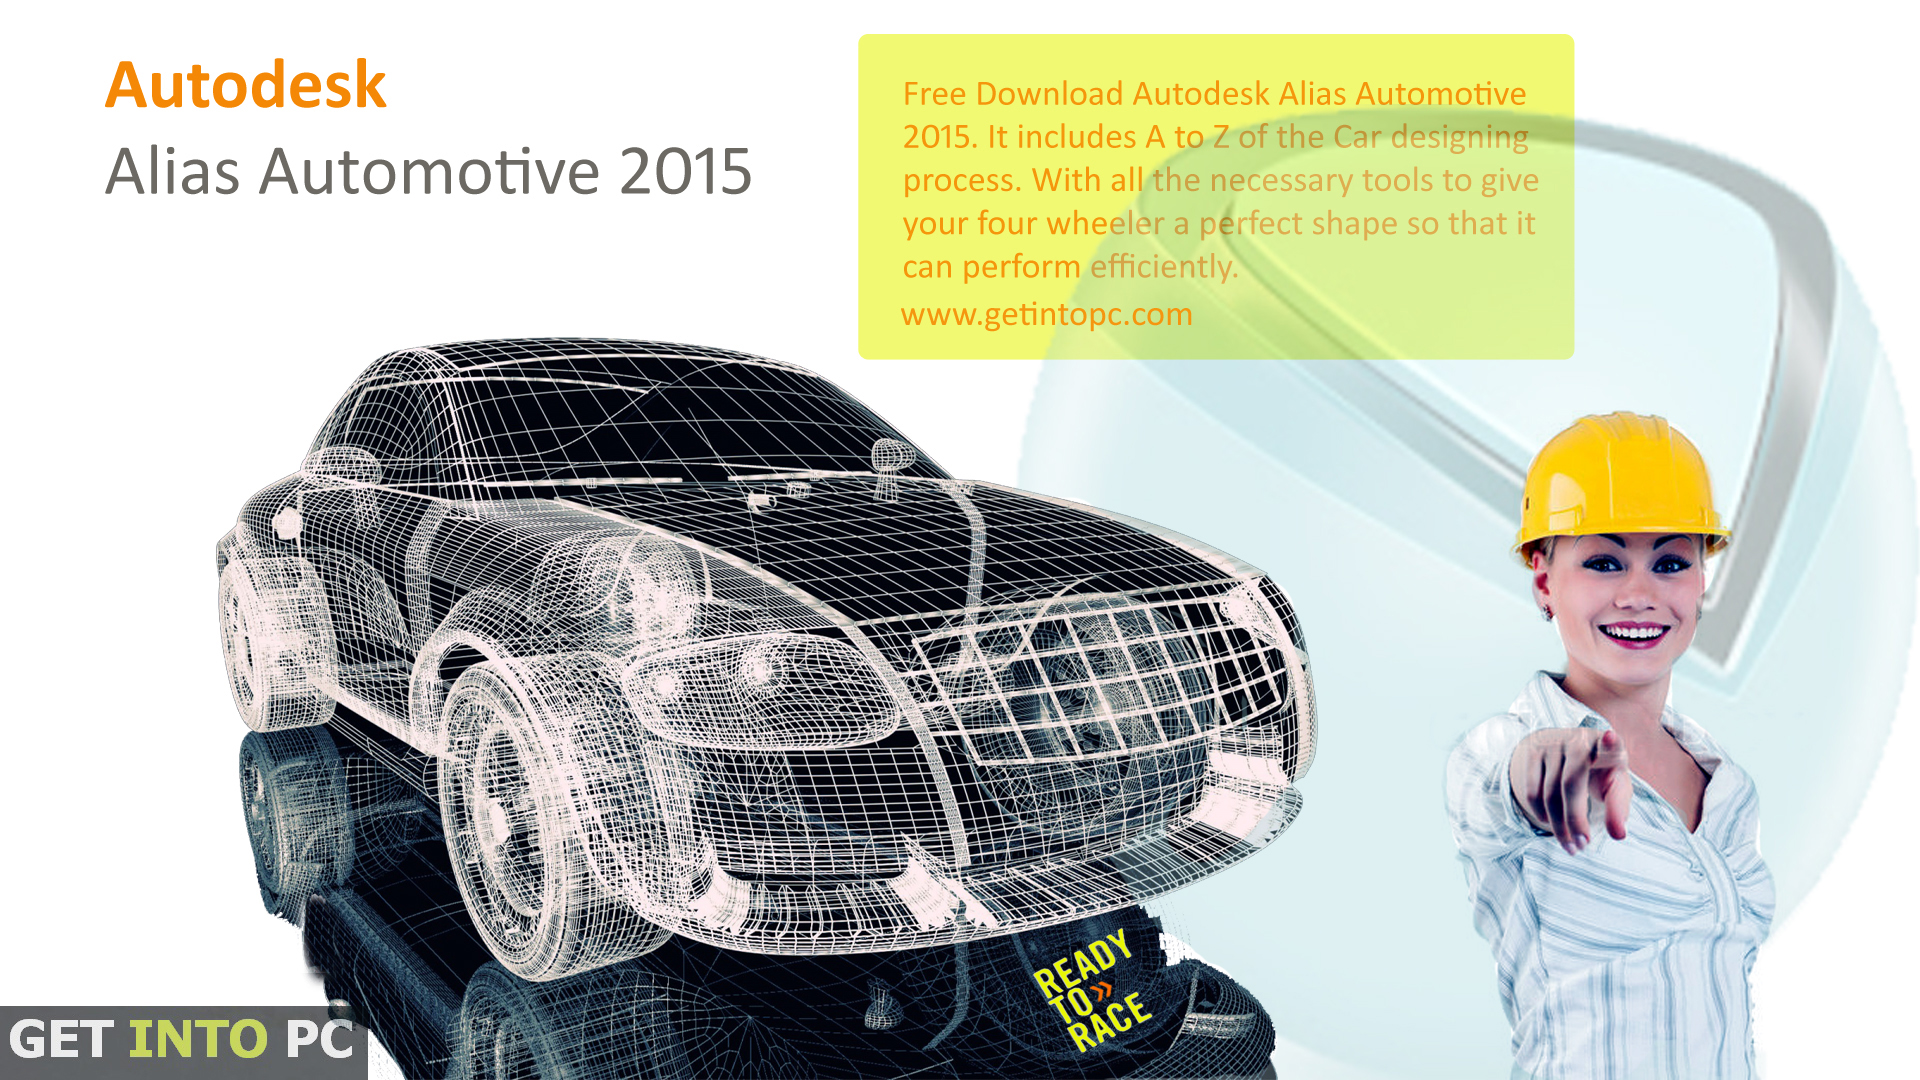 Autodesk Alias Automotive Software Part Of The Solution For